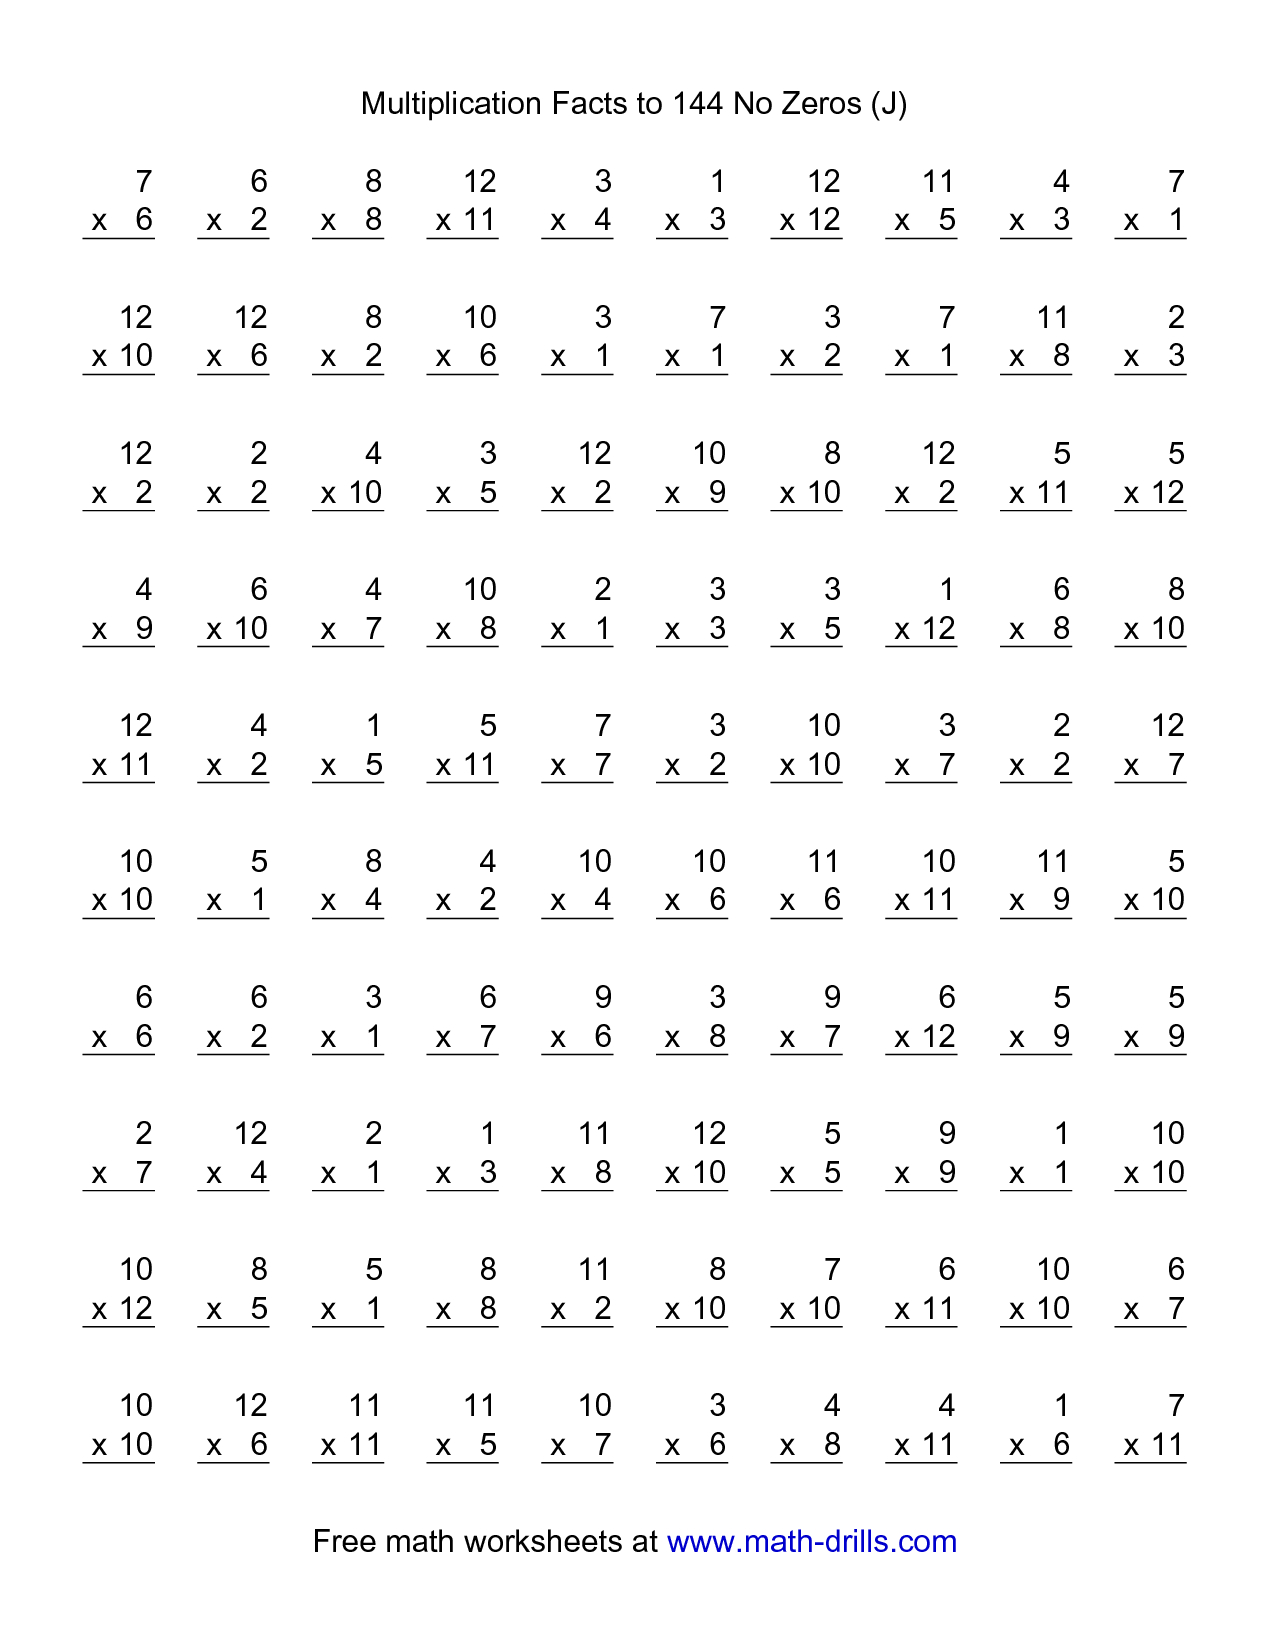 Multiplication Facts Worksheets | Multiplication Facts To 144 No | Multiplication Worksheets 1 12 Printable